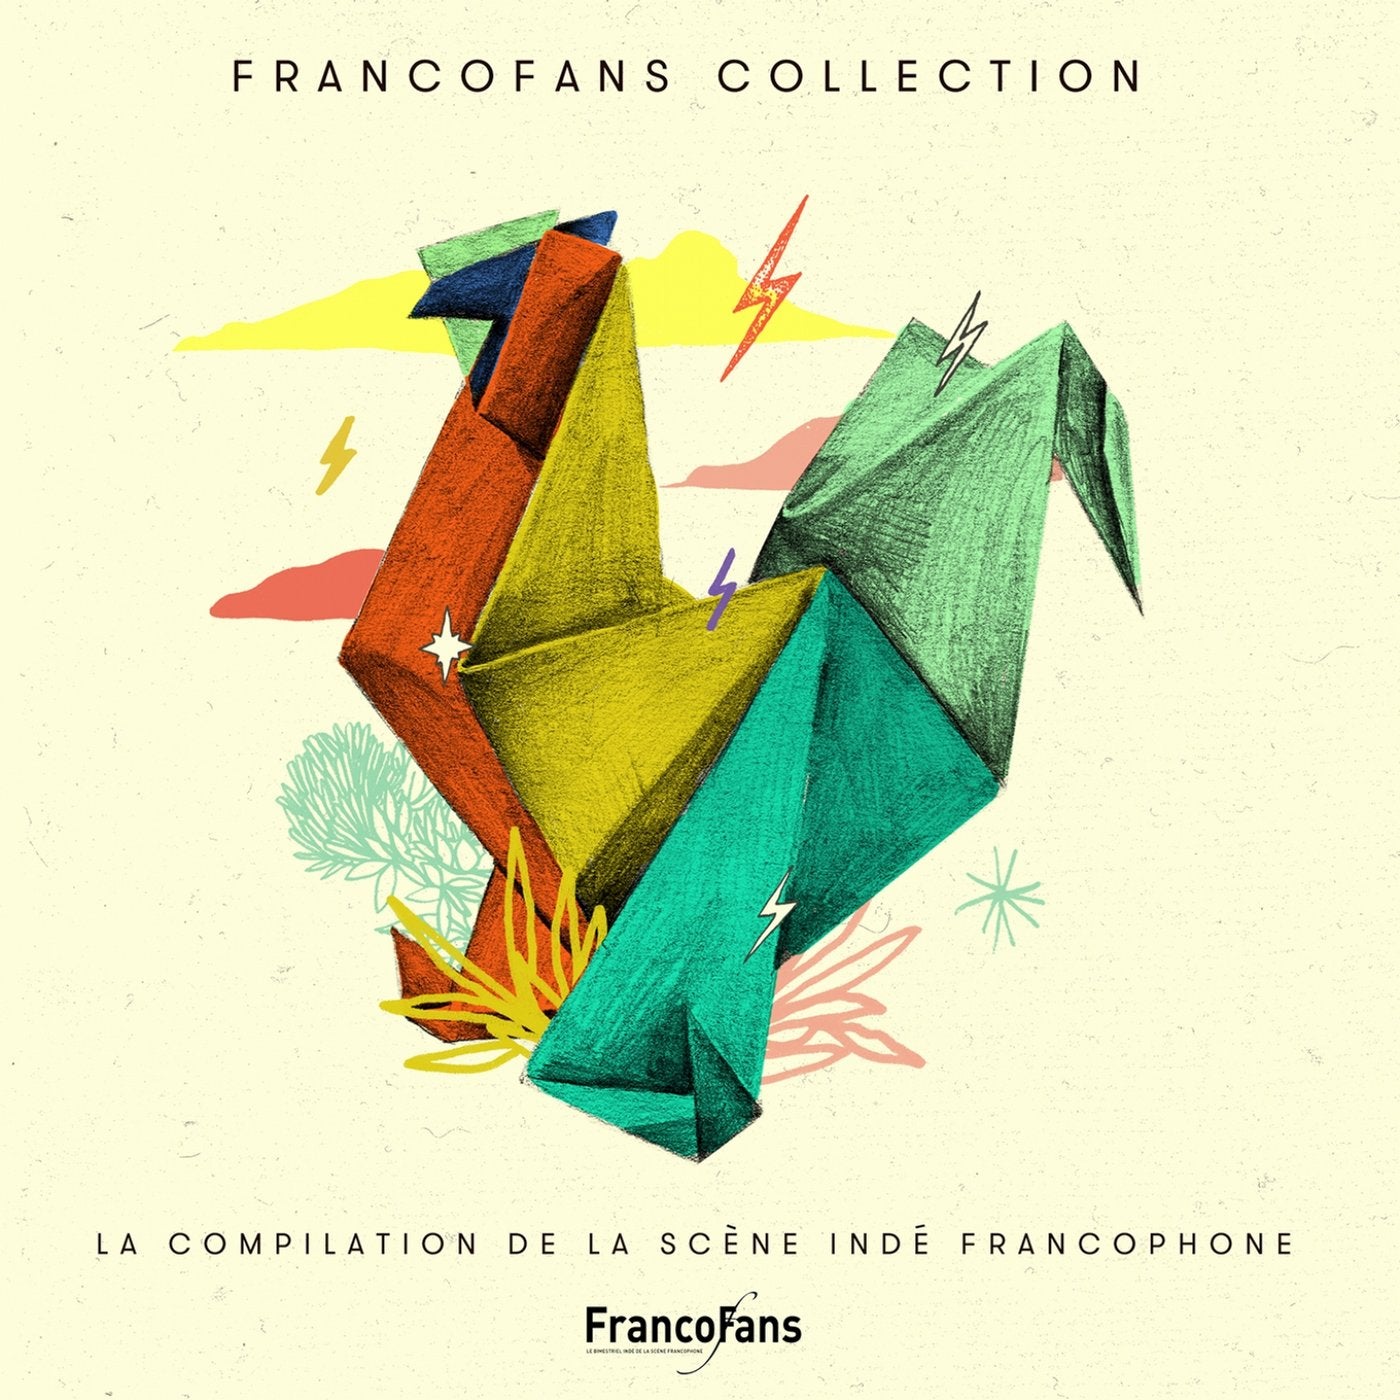 Francofans collection (La compilation de la scene inde francophone)